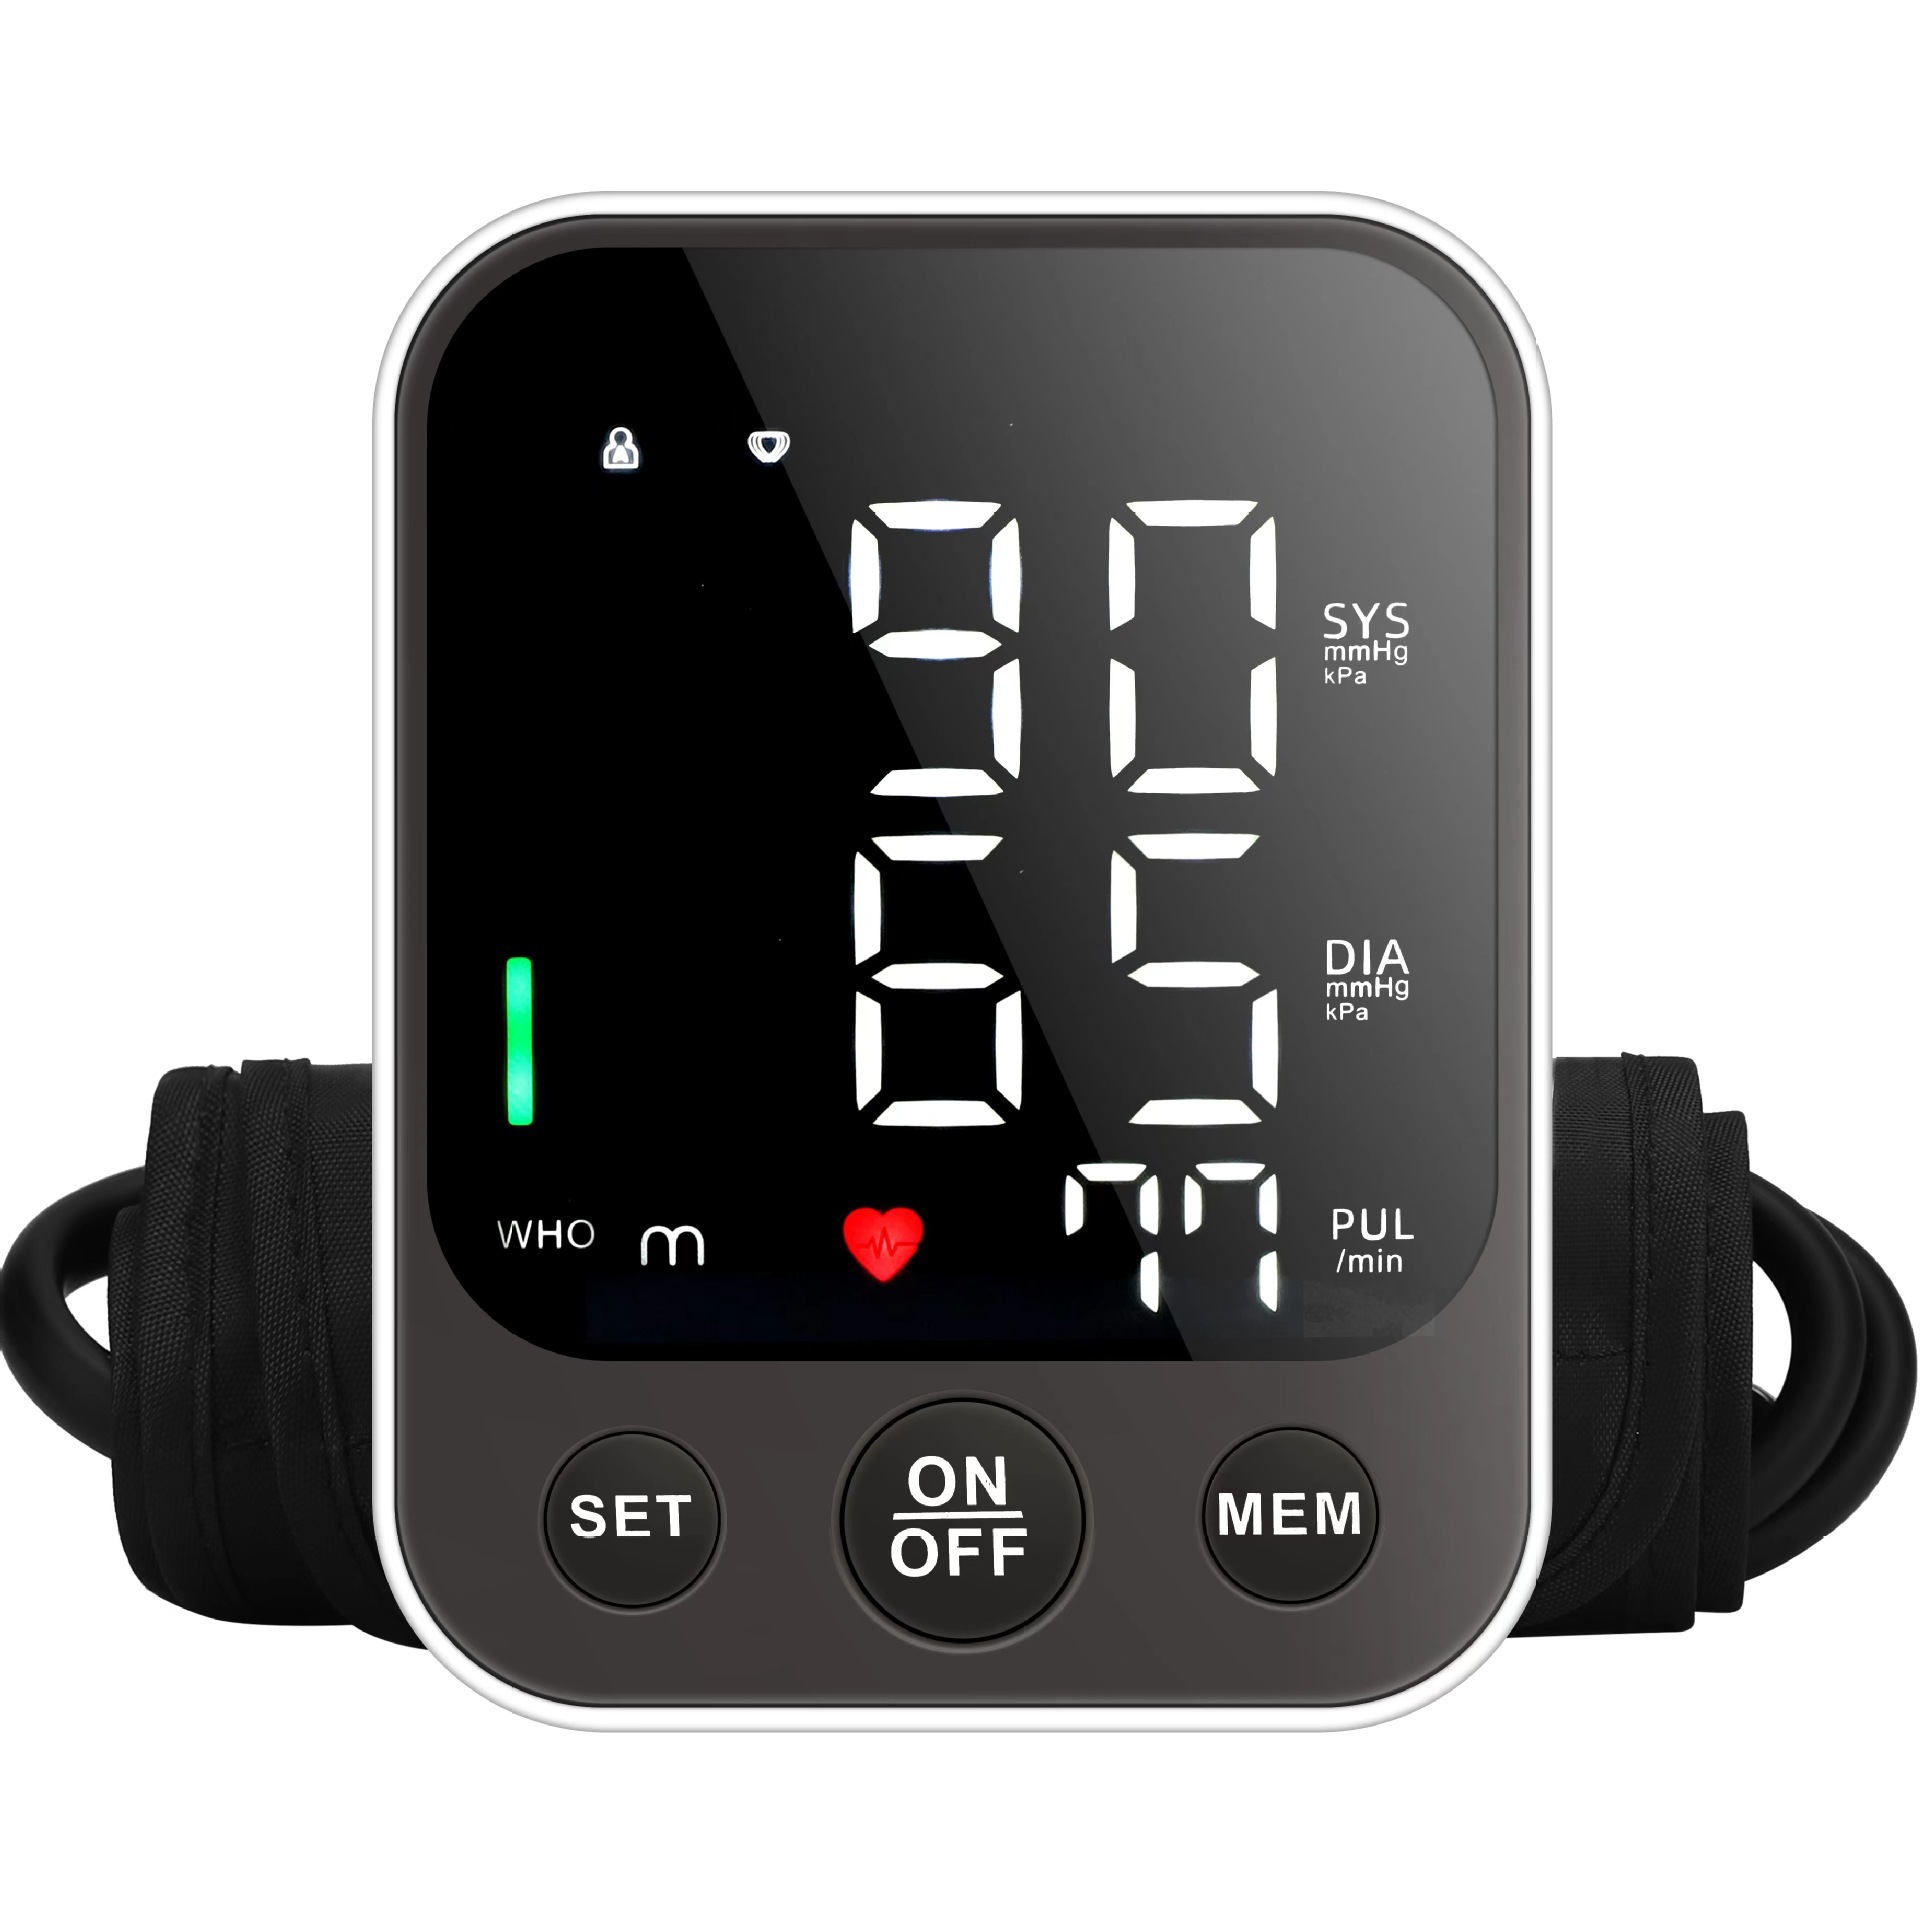 Led Screen Electronic Sphygmomanometer with Voice Sphygmomanometer Intelligent Blood Pressure Measuring Instrument Arm English